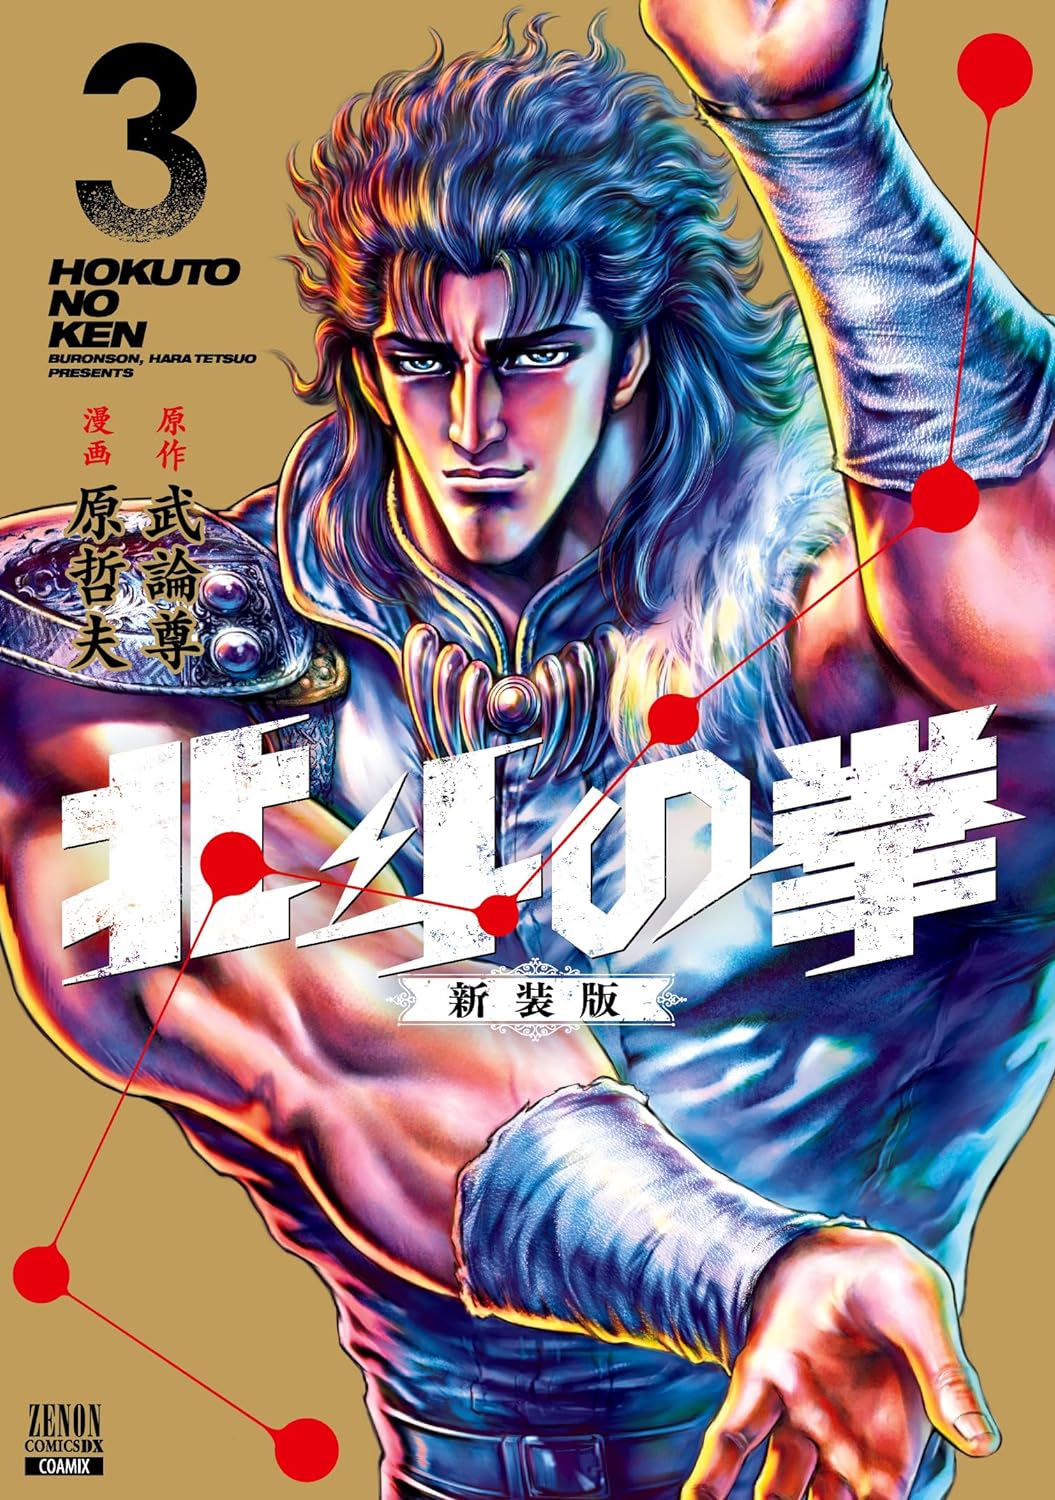 Hokuto no Ken (Fist of the North Star) #3  / Comic